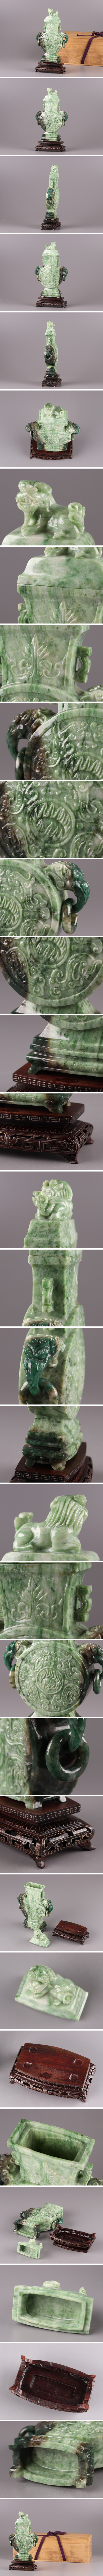 即納対応中国古玩 唐物 緑砡石 翡翠 置物 遊環 香炉 時代物 極上品 初だし品 4448 その他